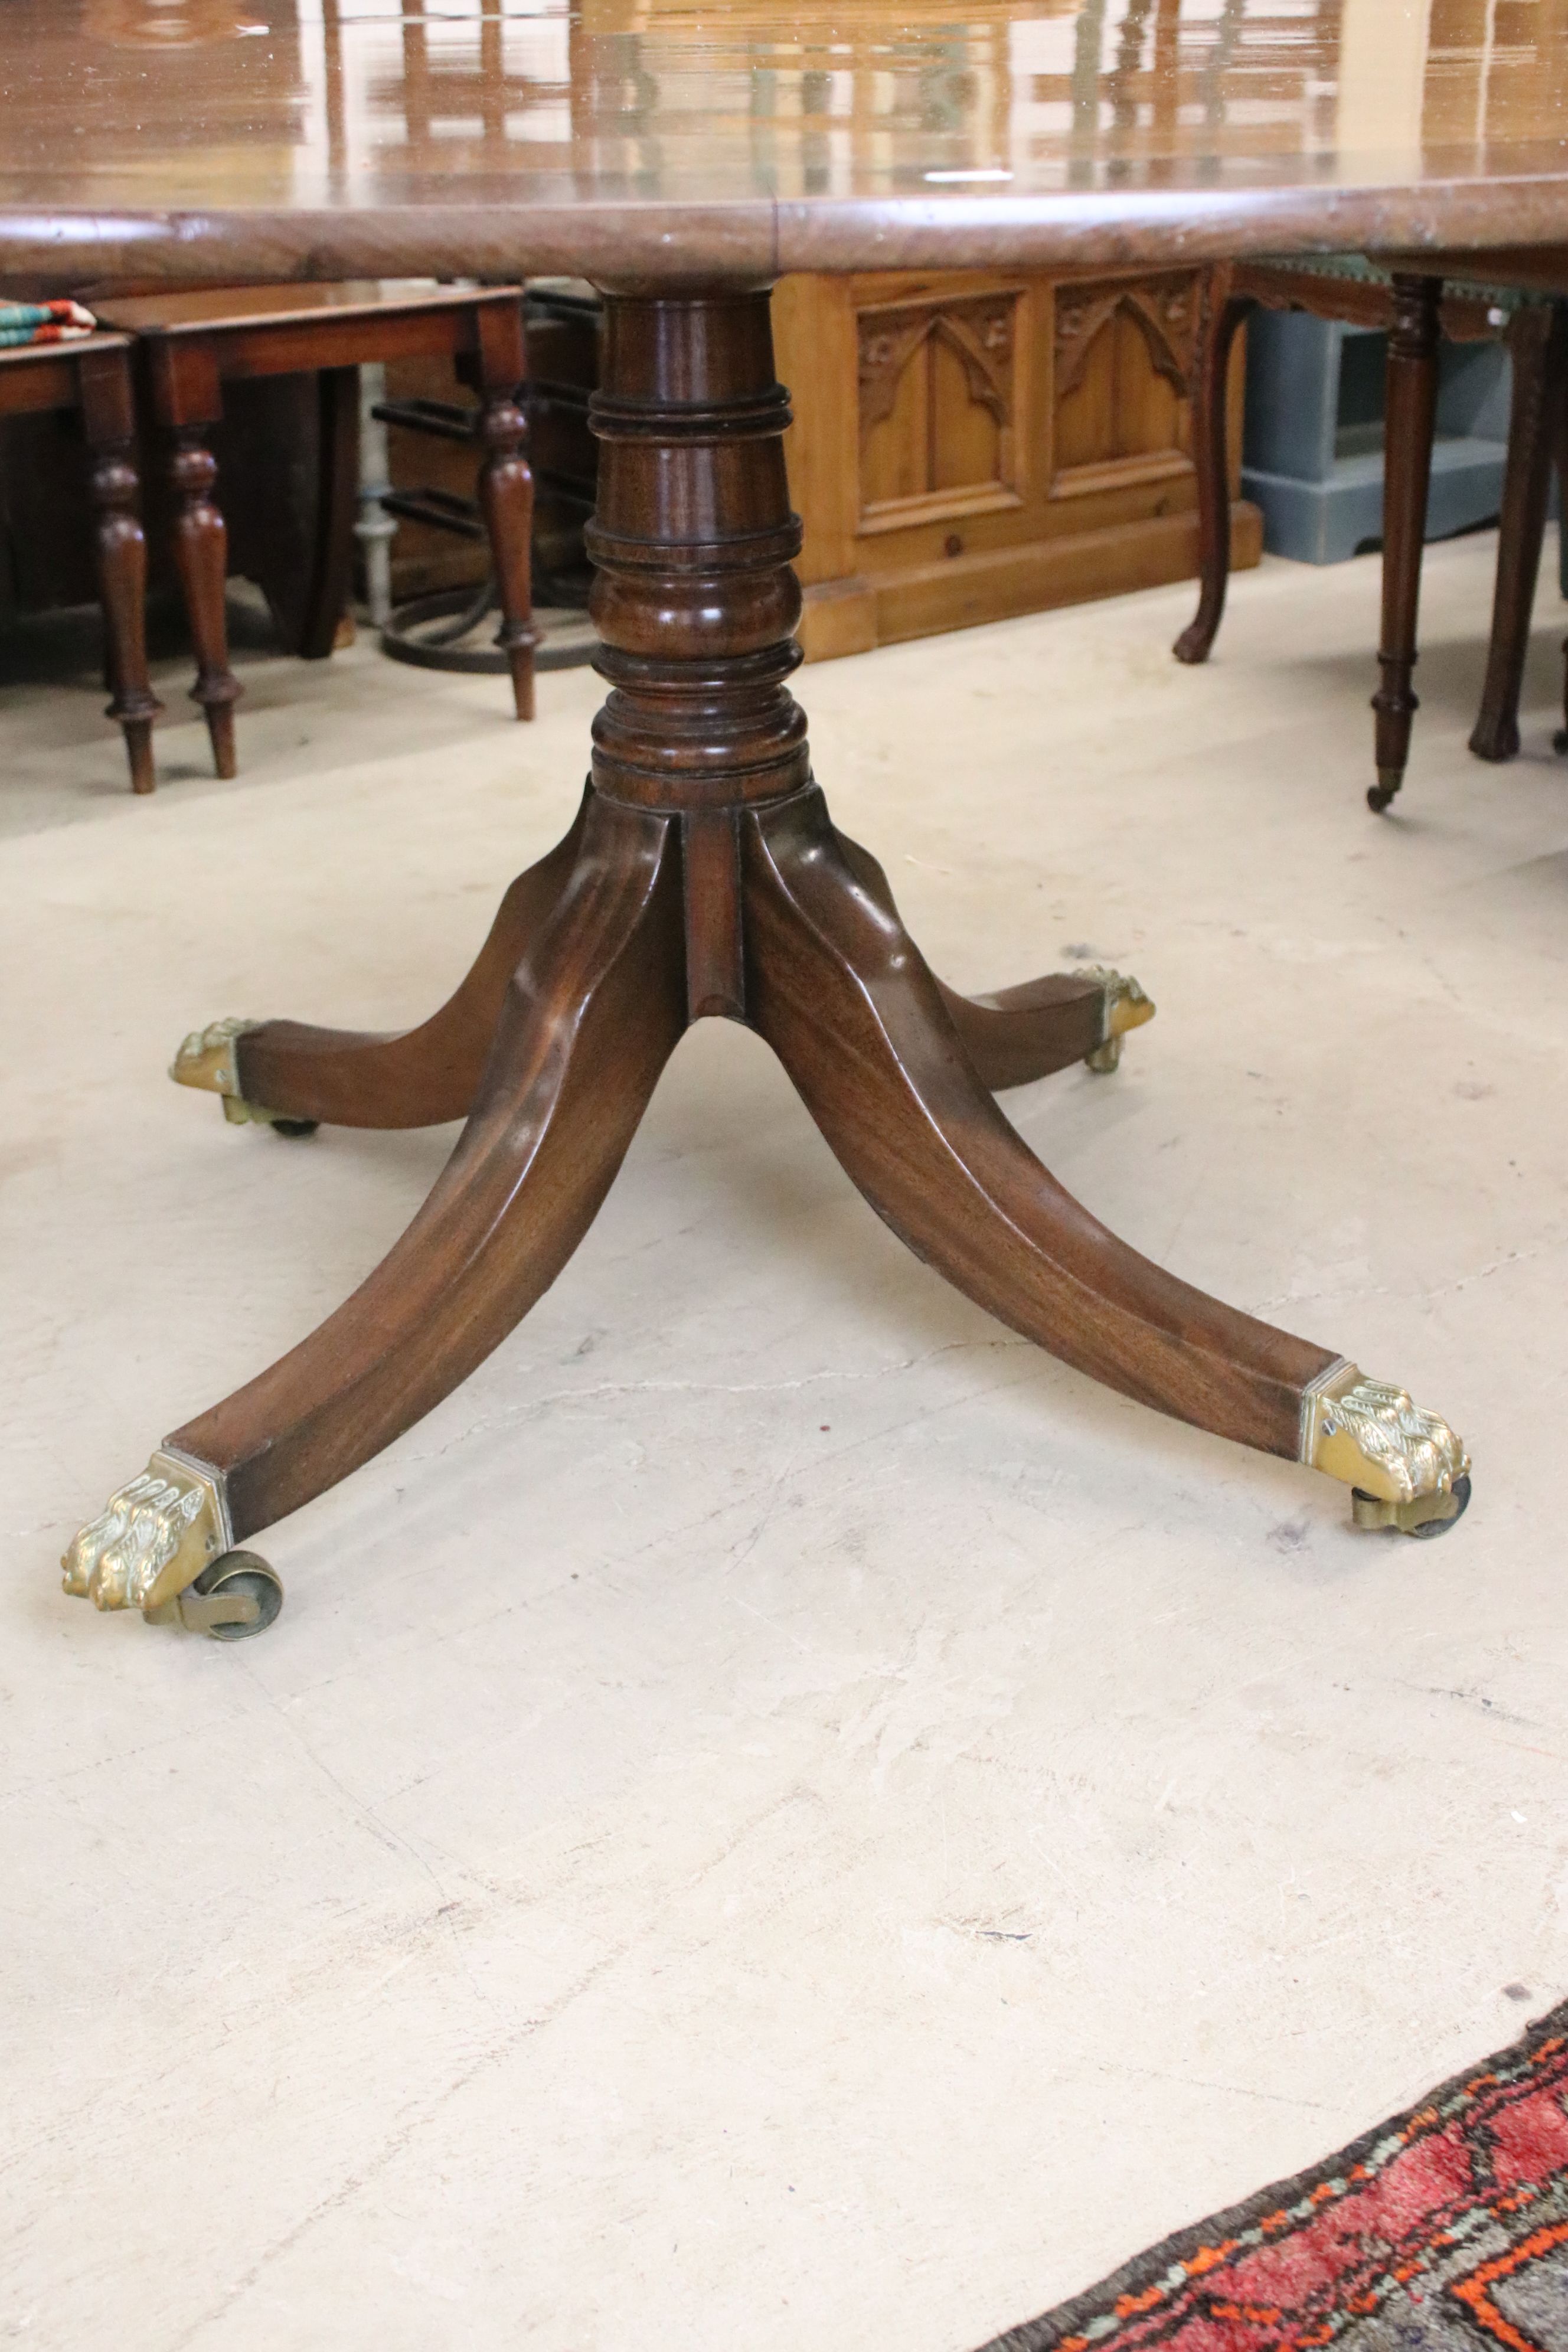 19th century style Mahogany Inlaid Circular Tilt Top Breakfast Table raised on a turned pedestal - Image 4 of 7